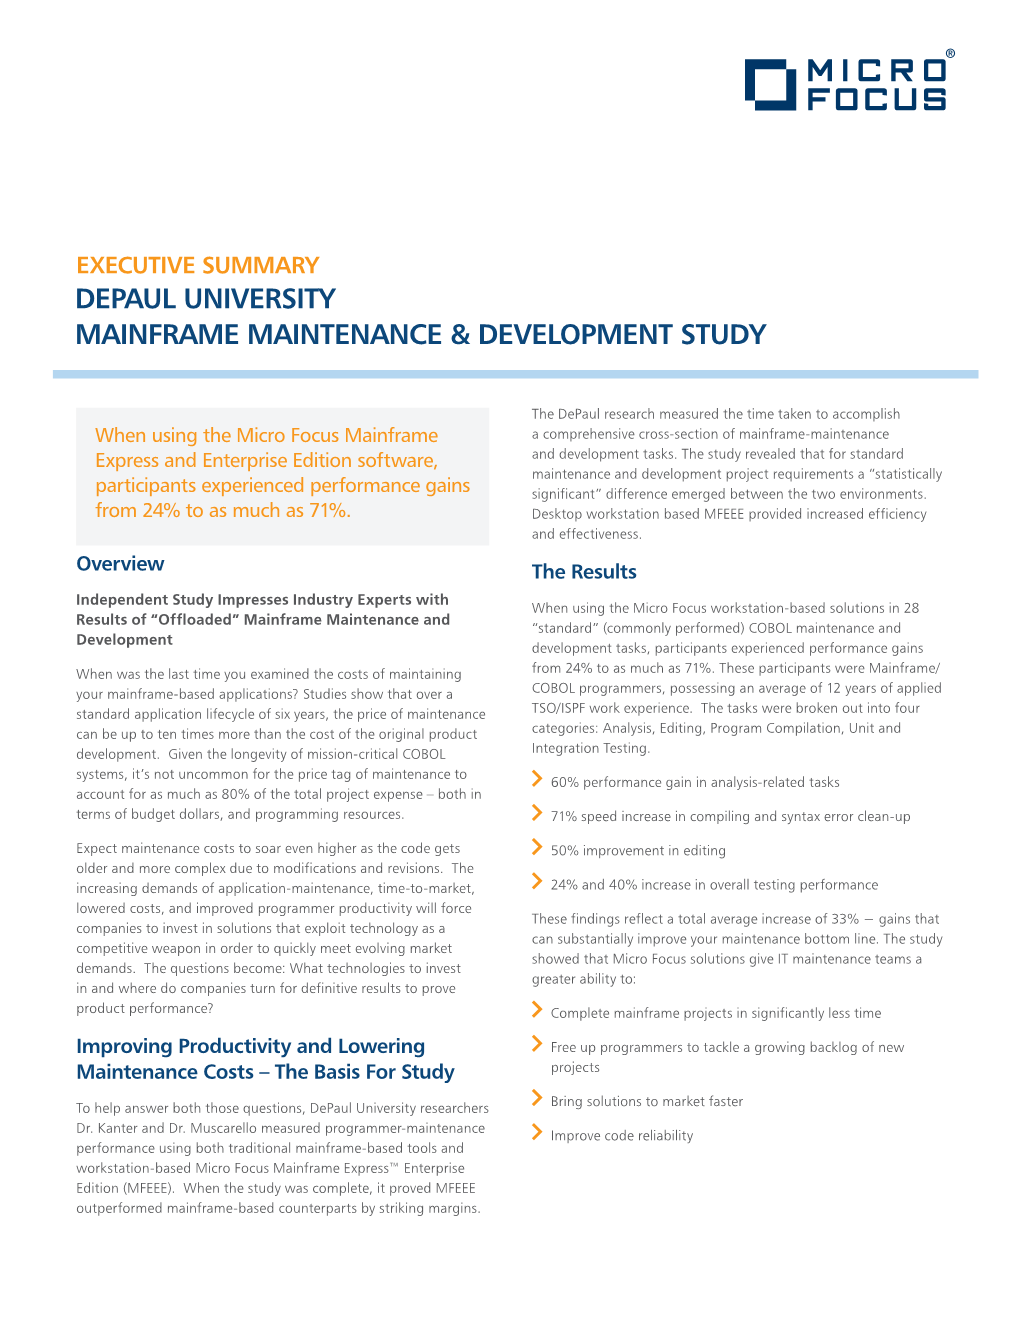 Depaul University Mainframe Maintenance & Development